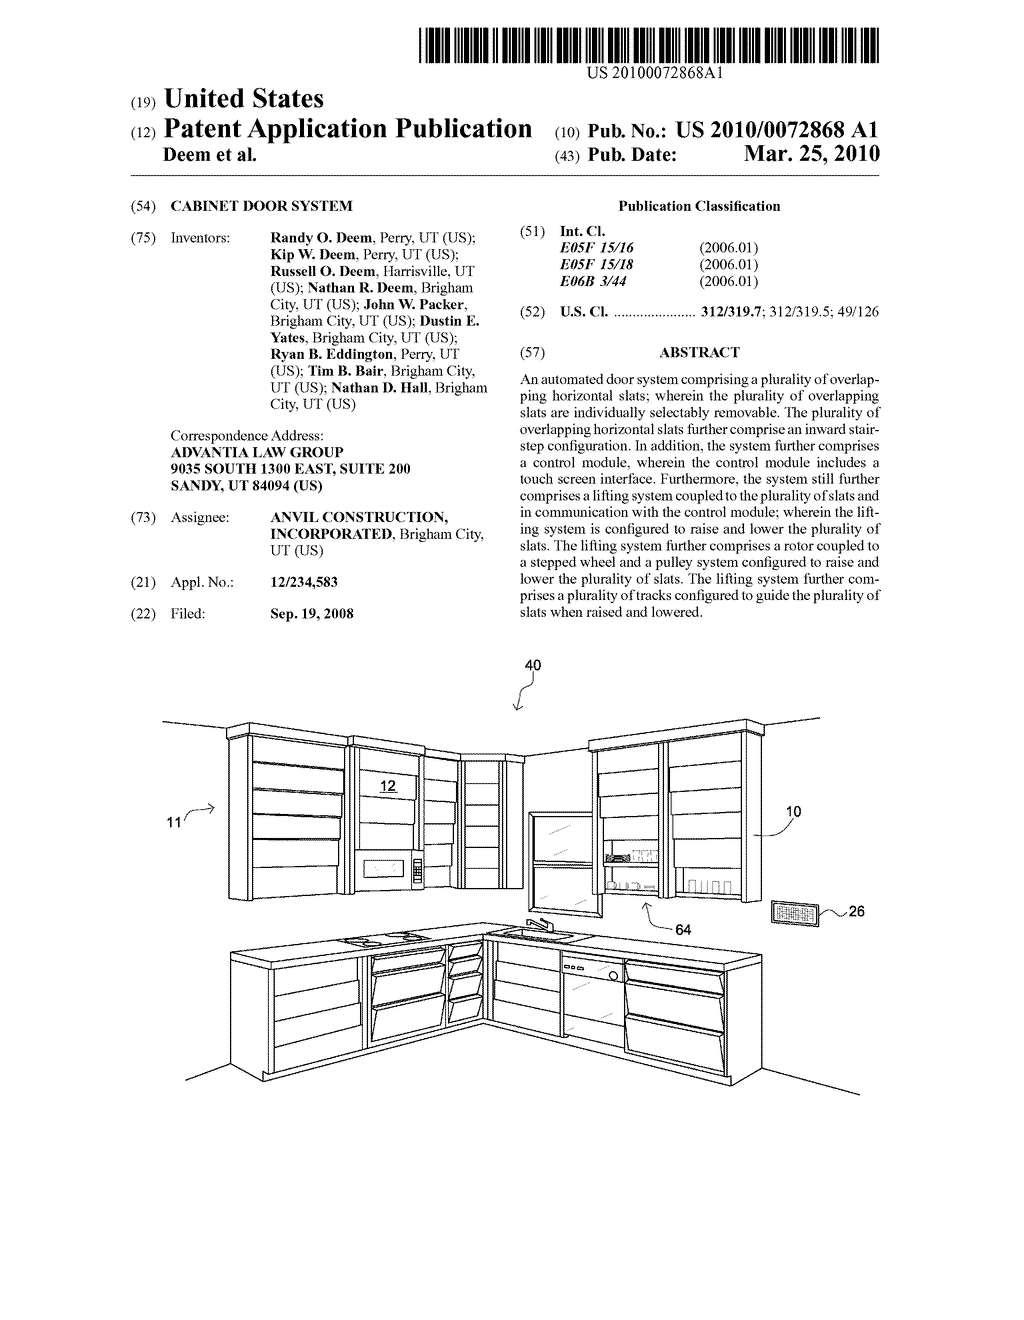 CABINET DOOR SYSTEM - diagram, schematic, and image 01